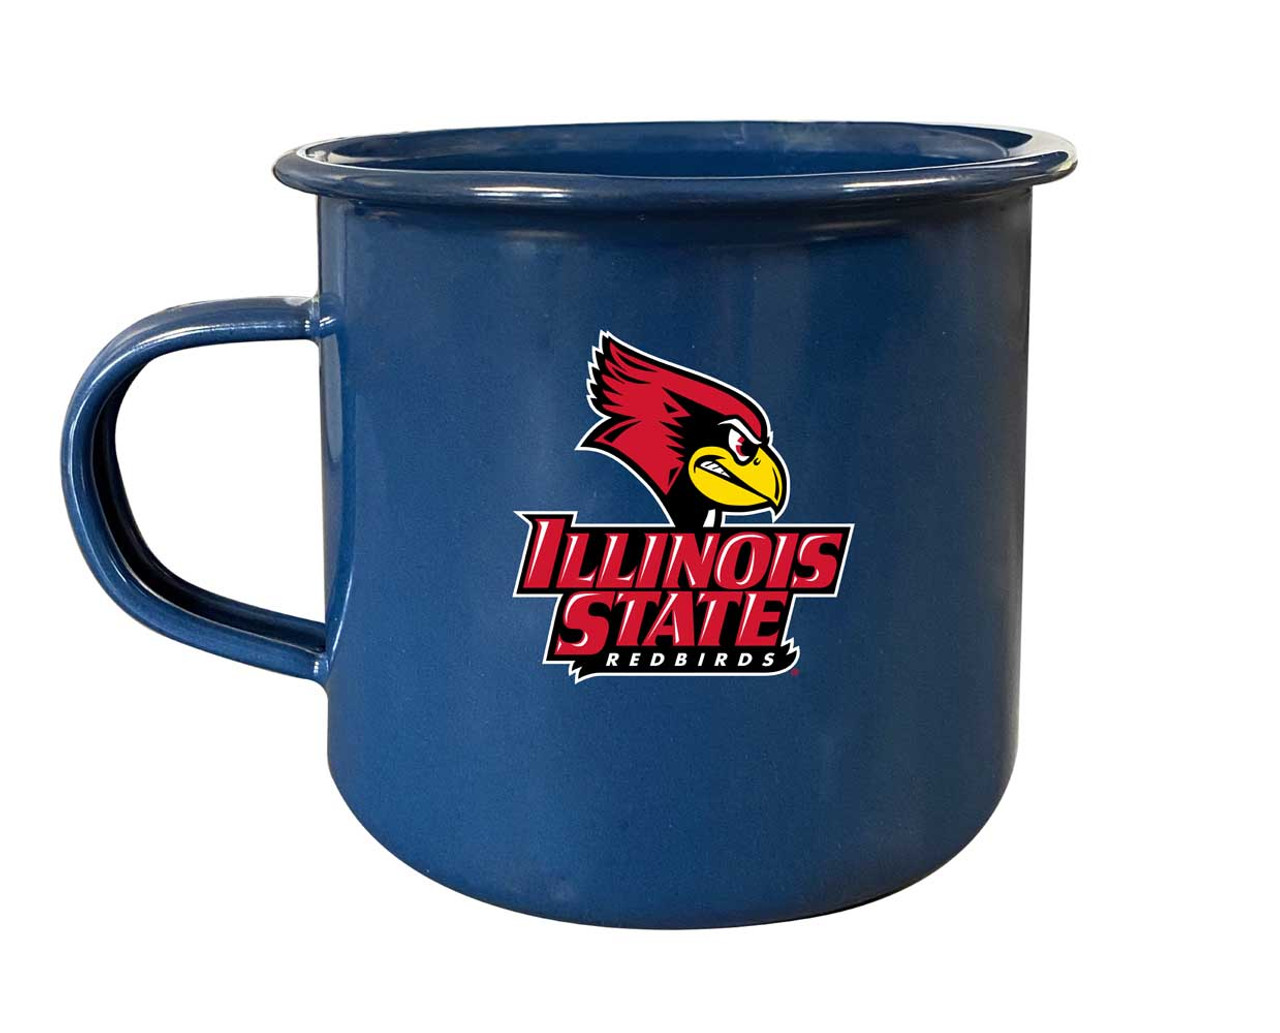 Illinois State Redbirds Colorbirds Tin Camper Coffee Mug (Choose Your Color).